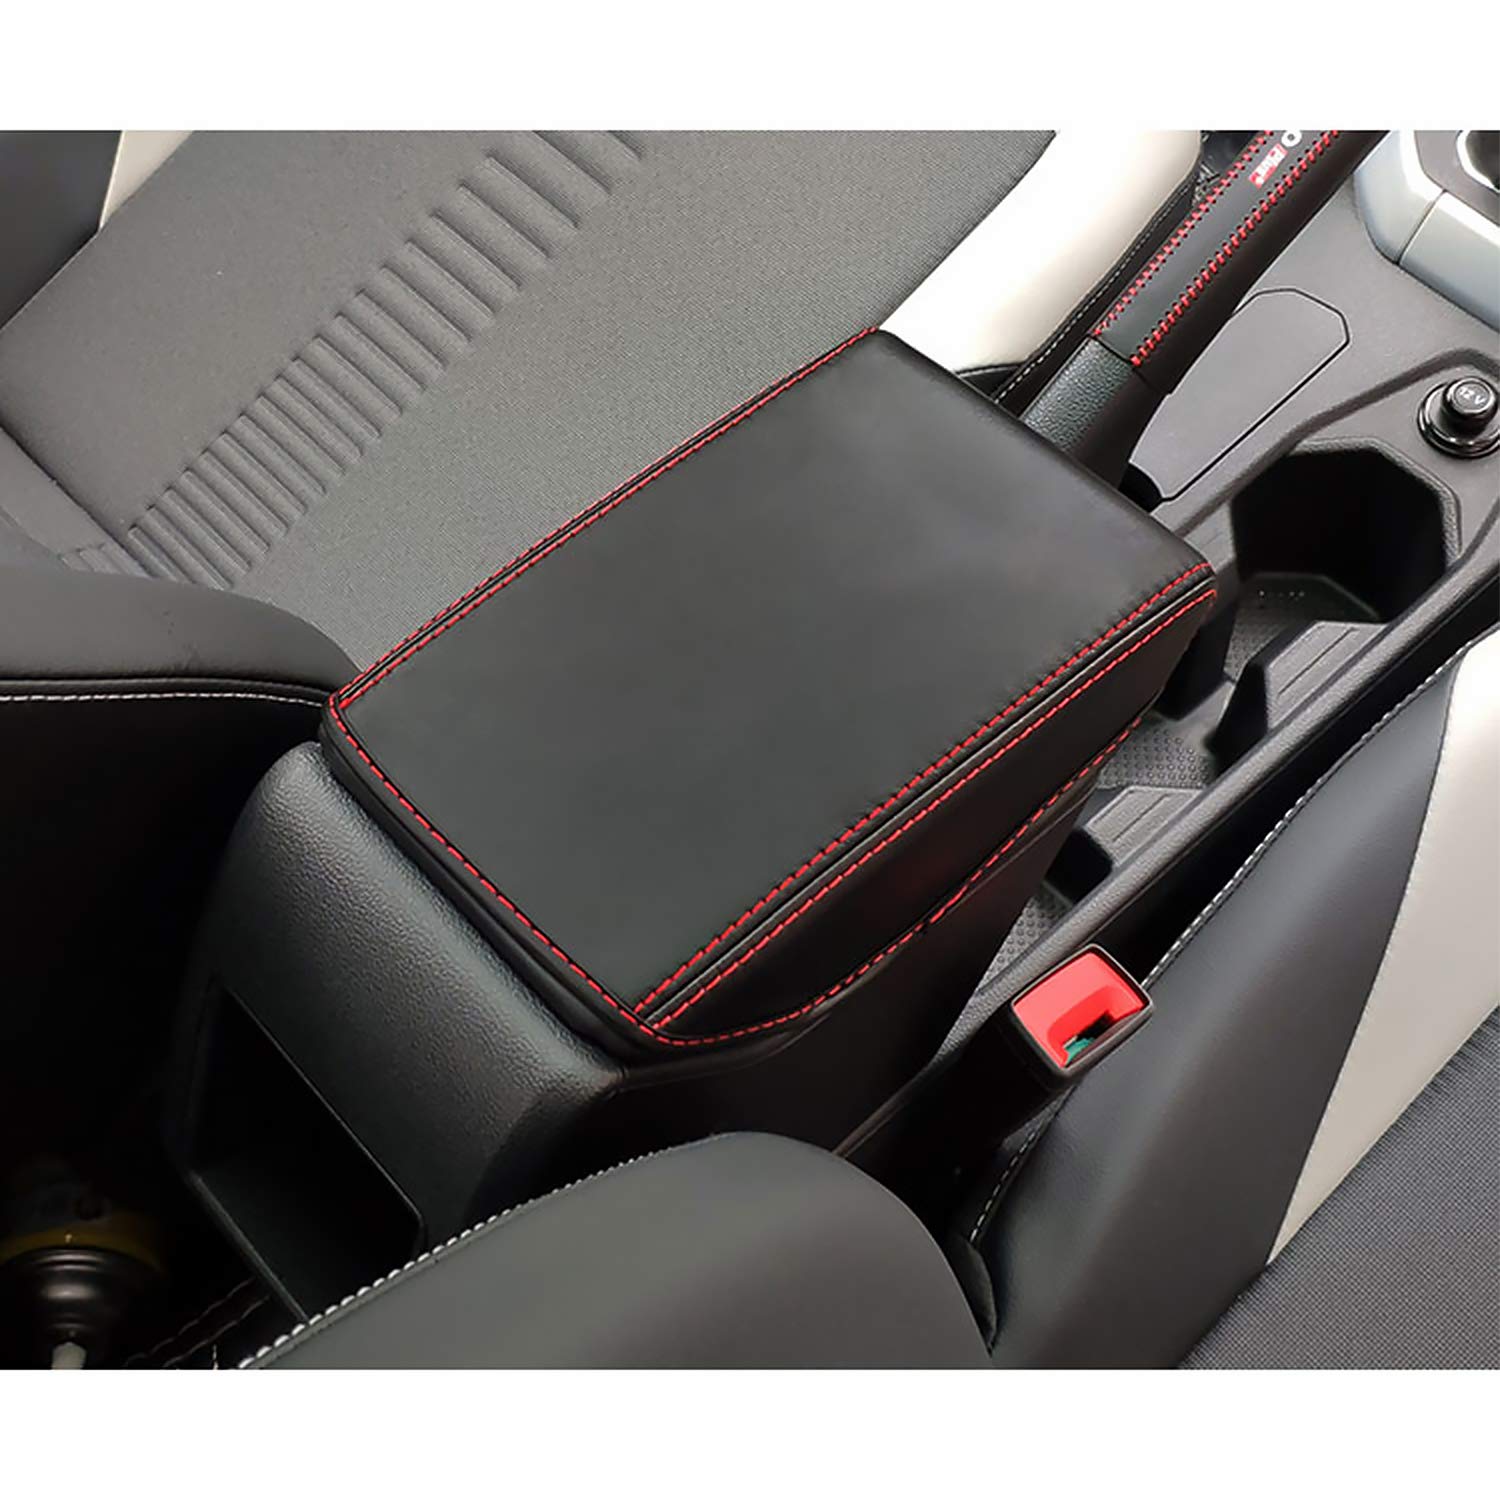 VW Polo MK6 AW1 GTI Armrest Cover 2018+ - LFOTPP Car Accessories